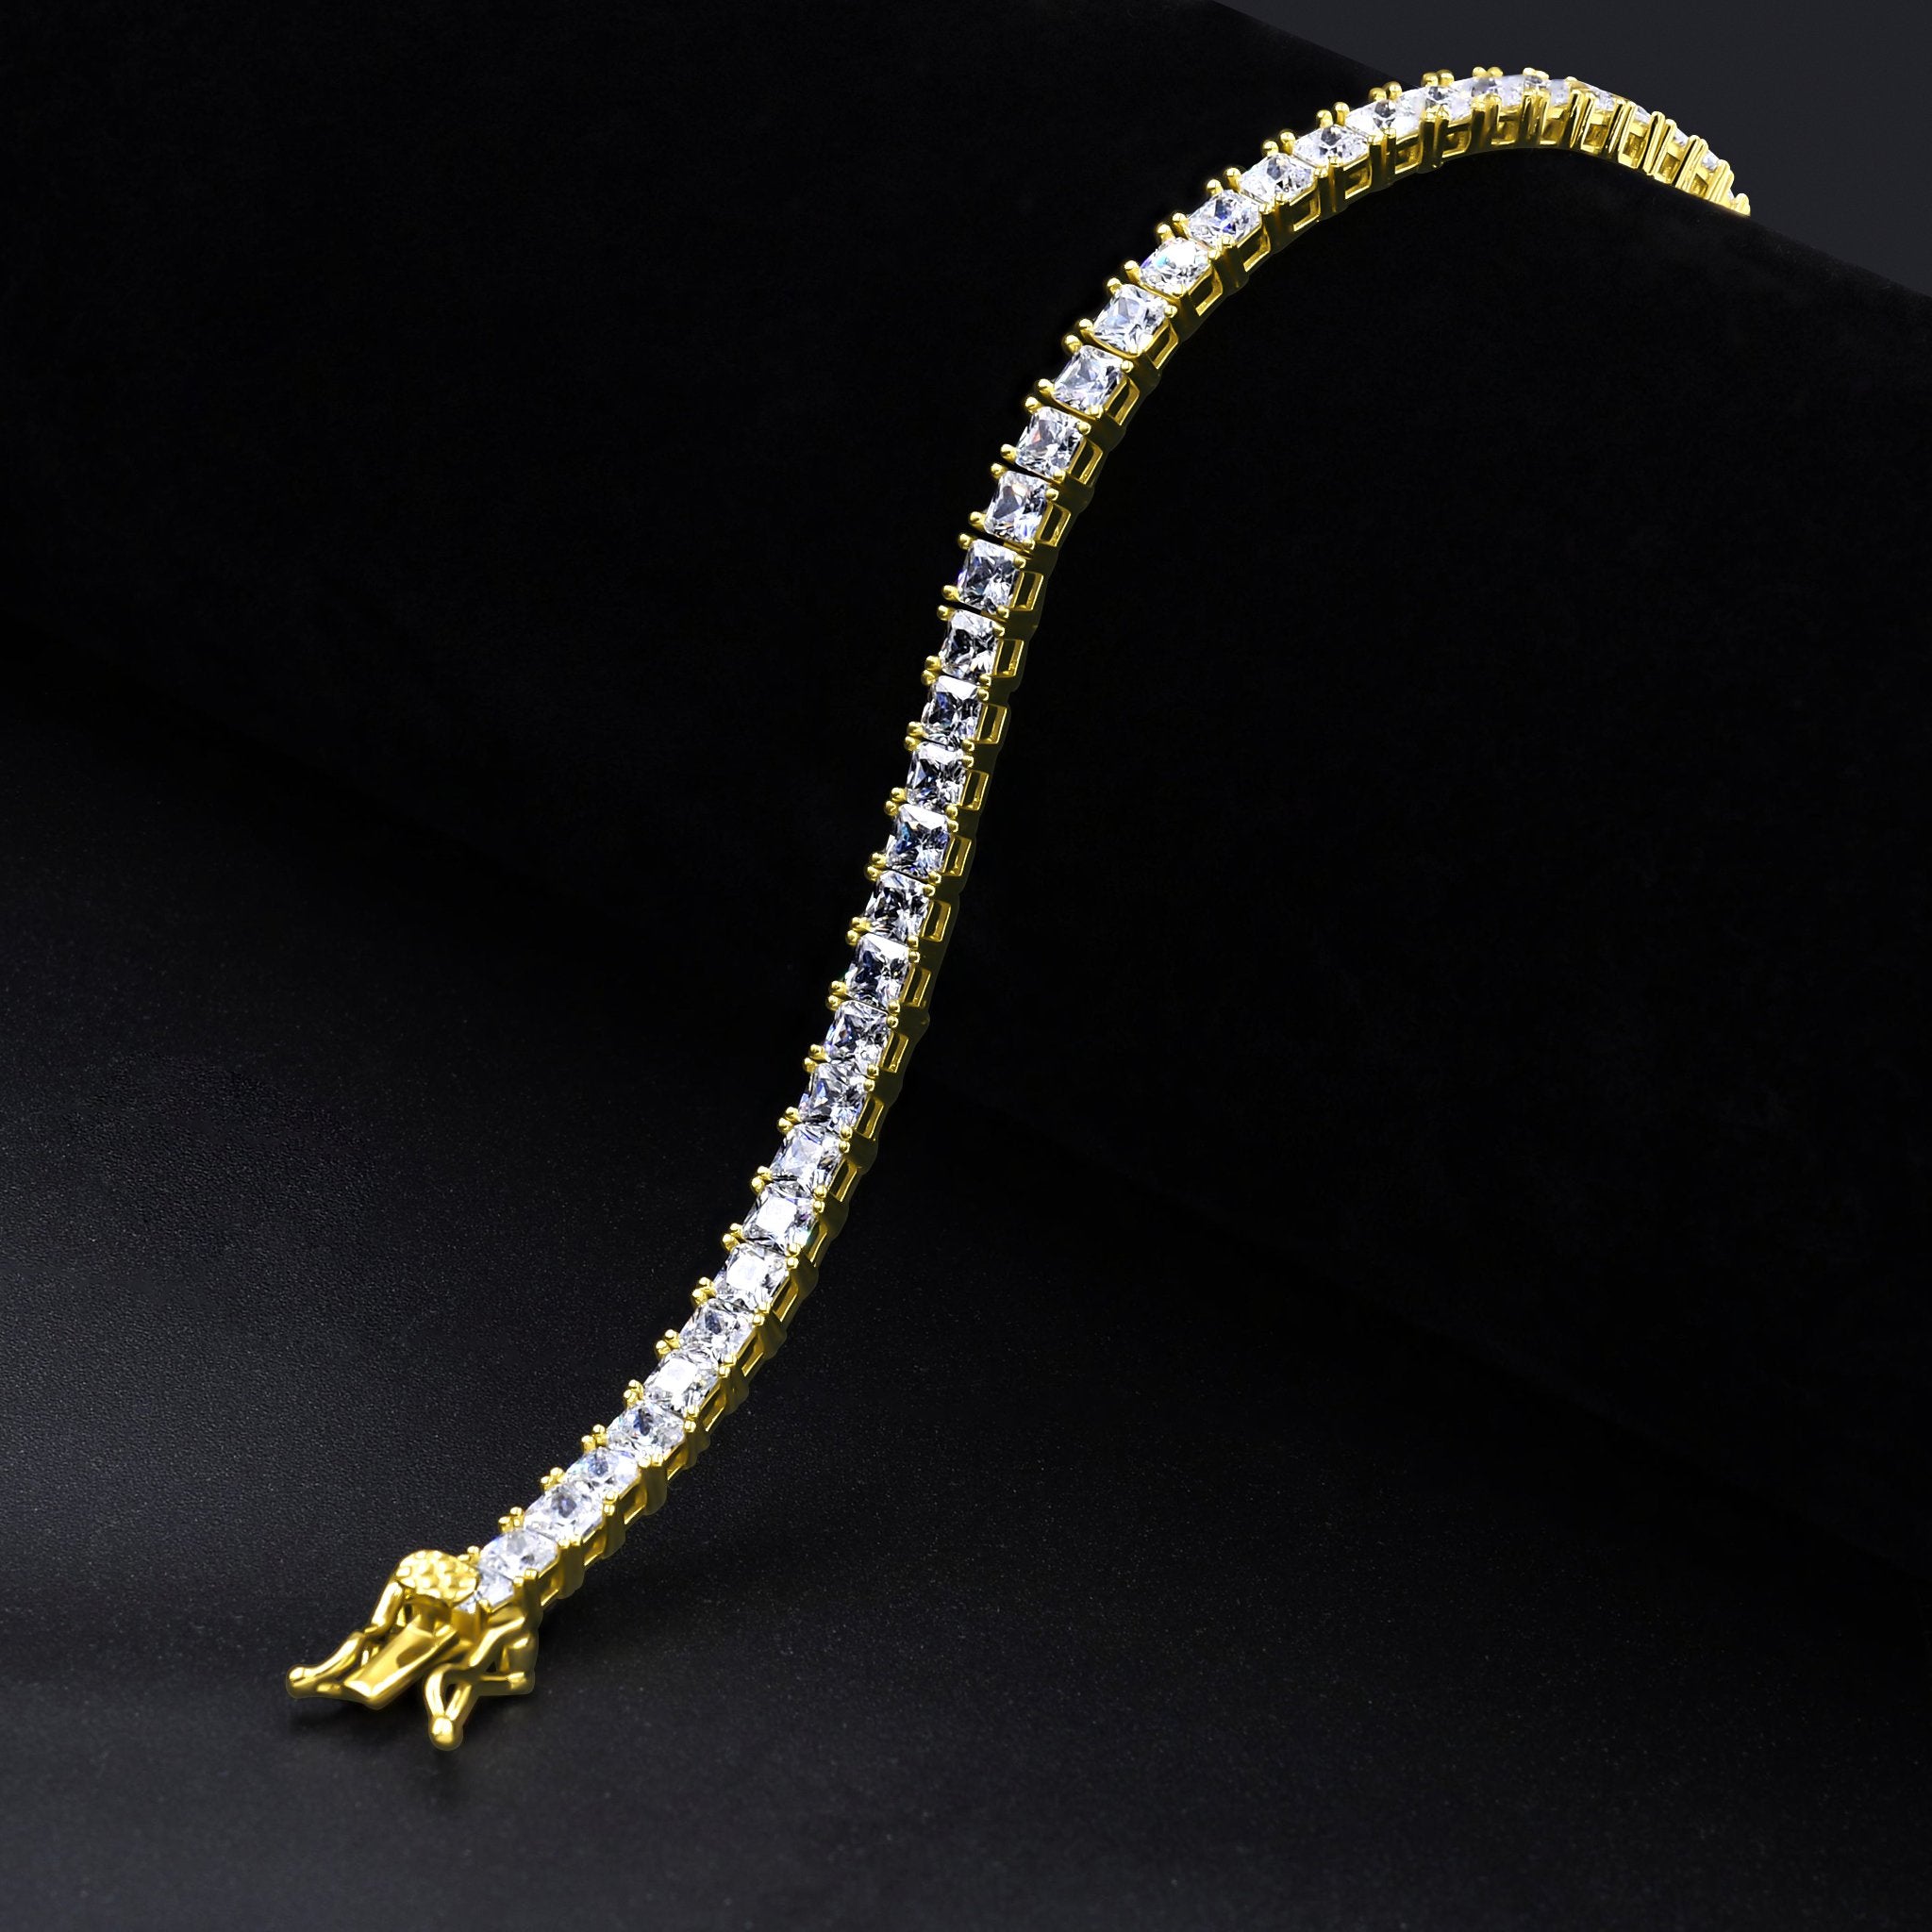 Radiant CZ Stones Bracelet | AAA Grade Quality, 925 Sterling Silver, 4mm Diameter Stones - Jewelry & Watches - Bijou Her -  -  - 